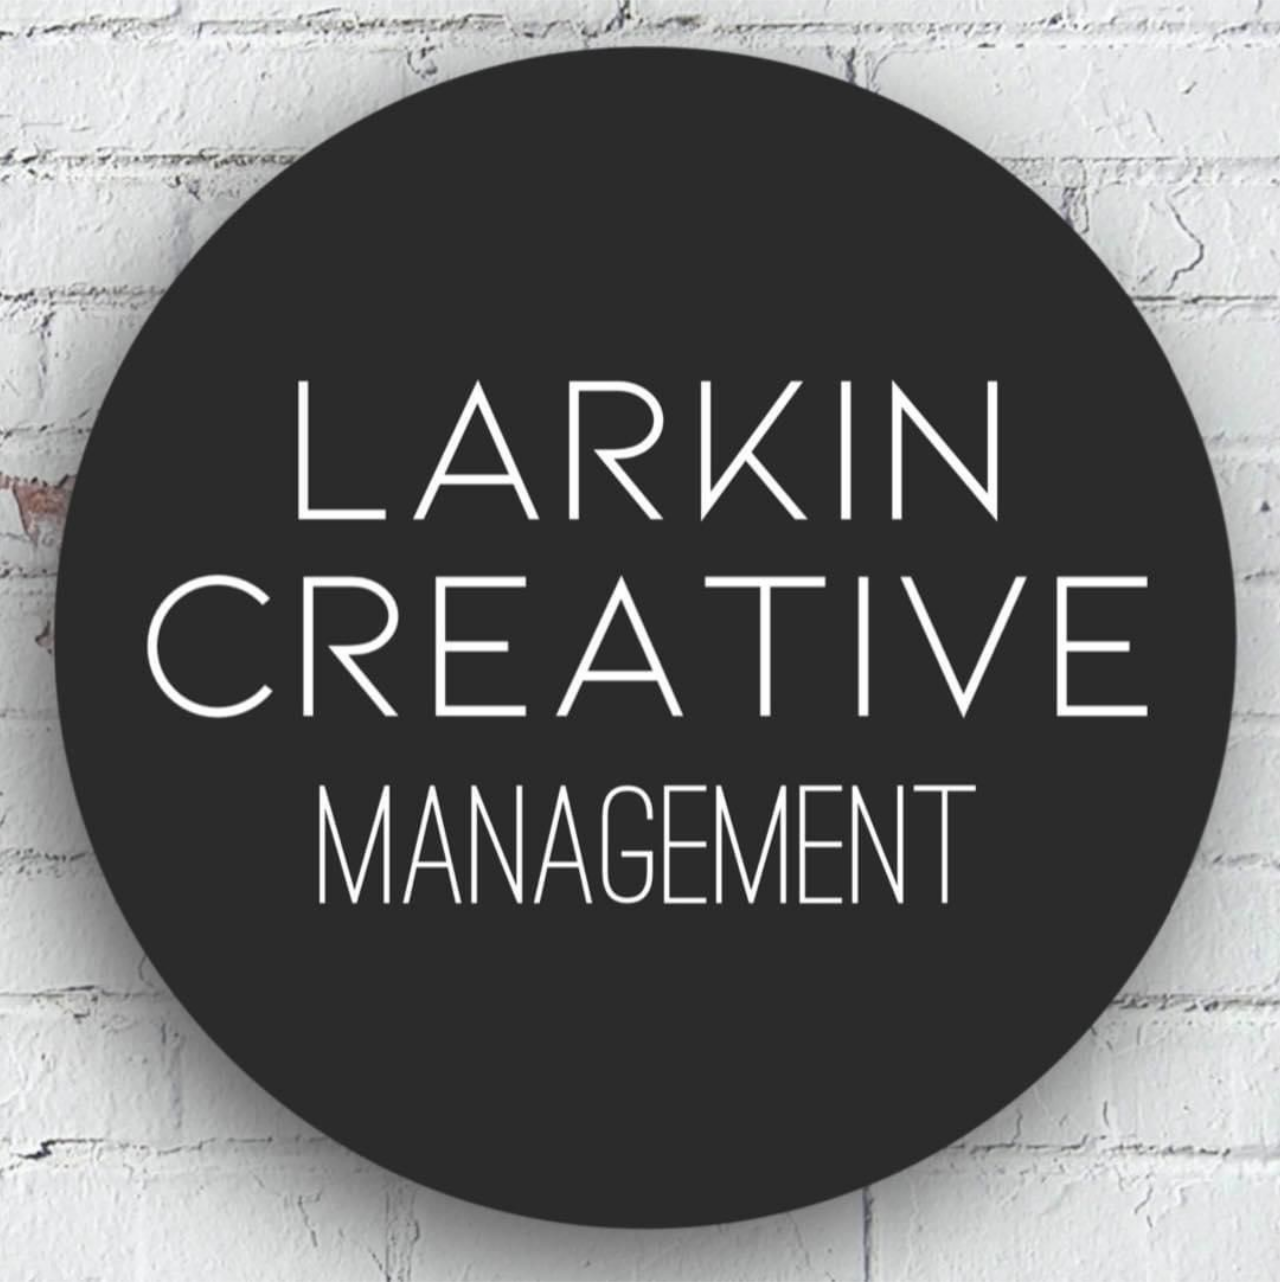 Larkin Creative Management's logo